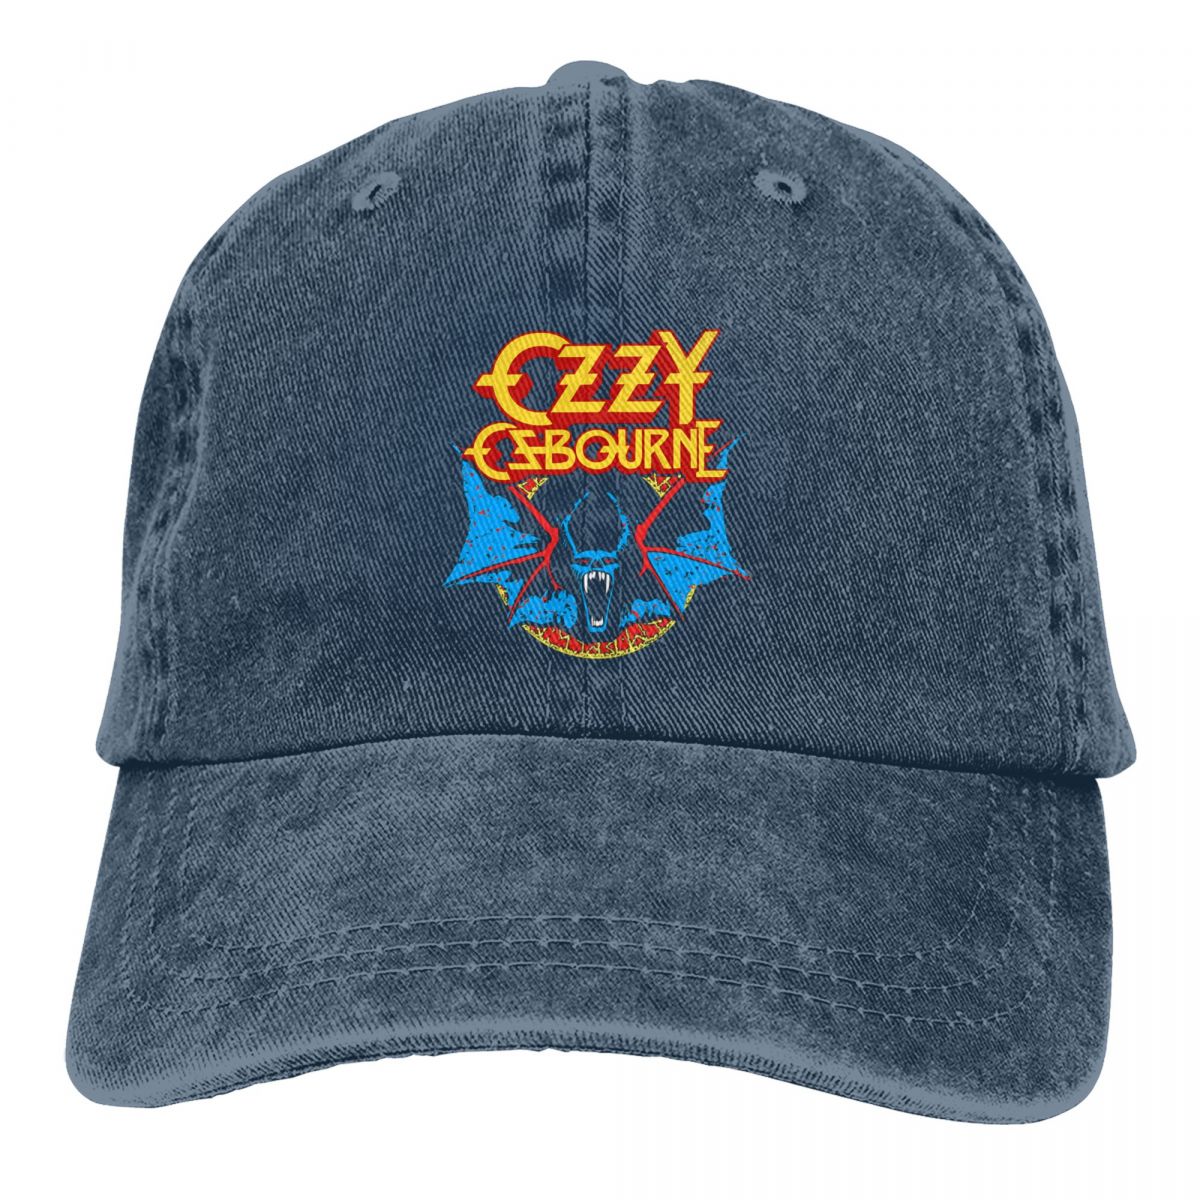 Ozzy Osbourne Rock Bat Prince Of Darkness - Snapback Baseball Cap - Summer Hat For Men and Women-Navy Blue-One Size-